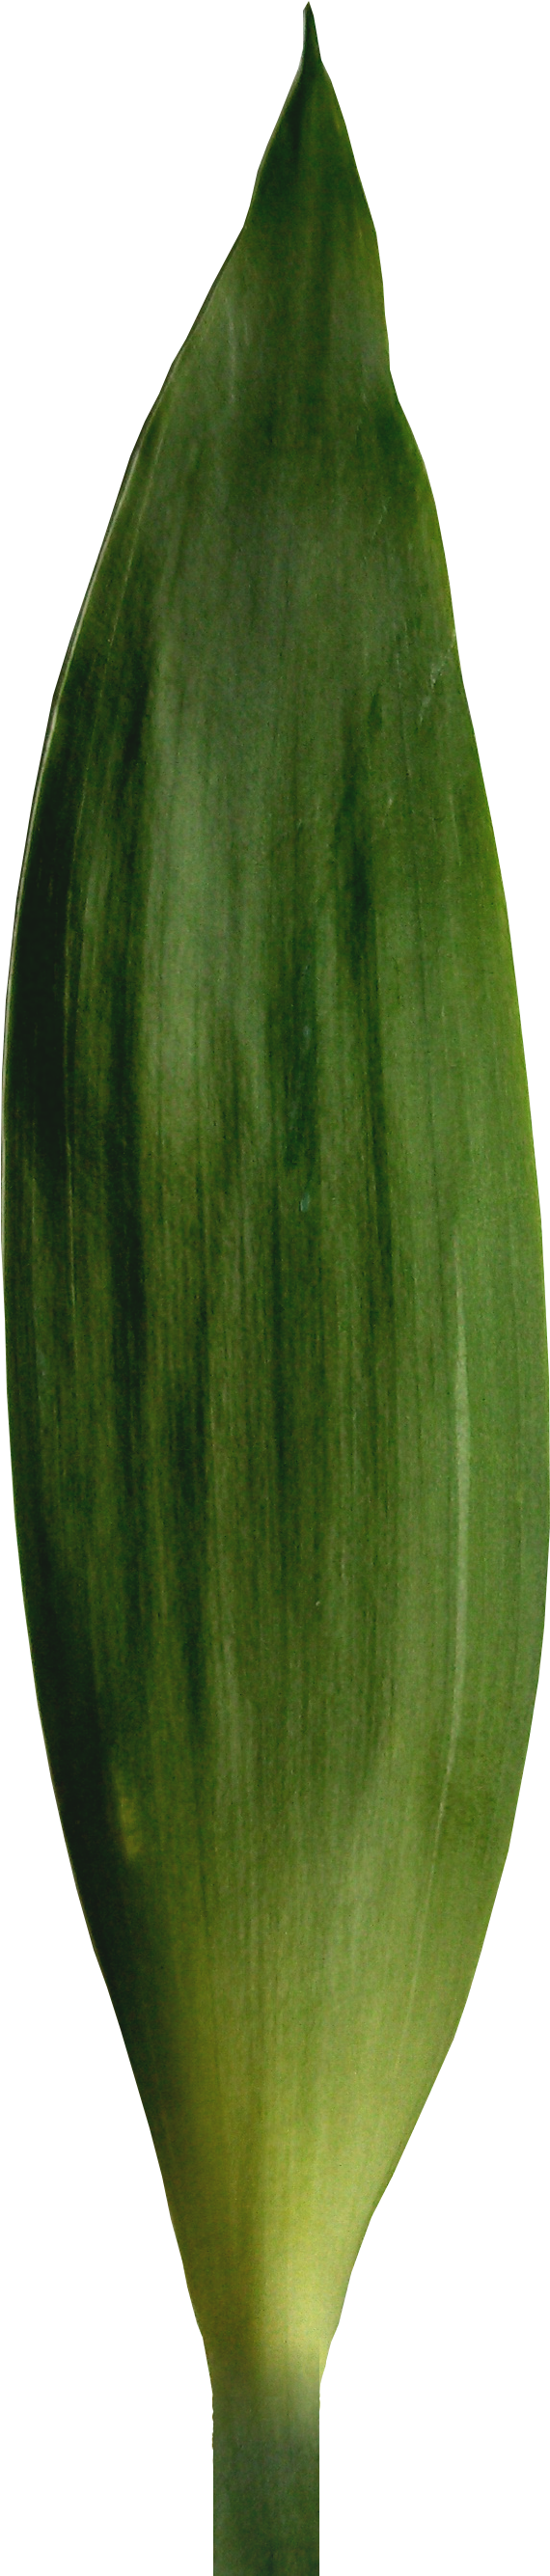 Leaf Bud Flower Plant Stem Petal - Banana (900x2900)